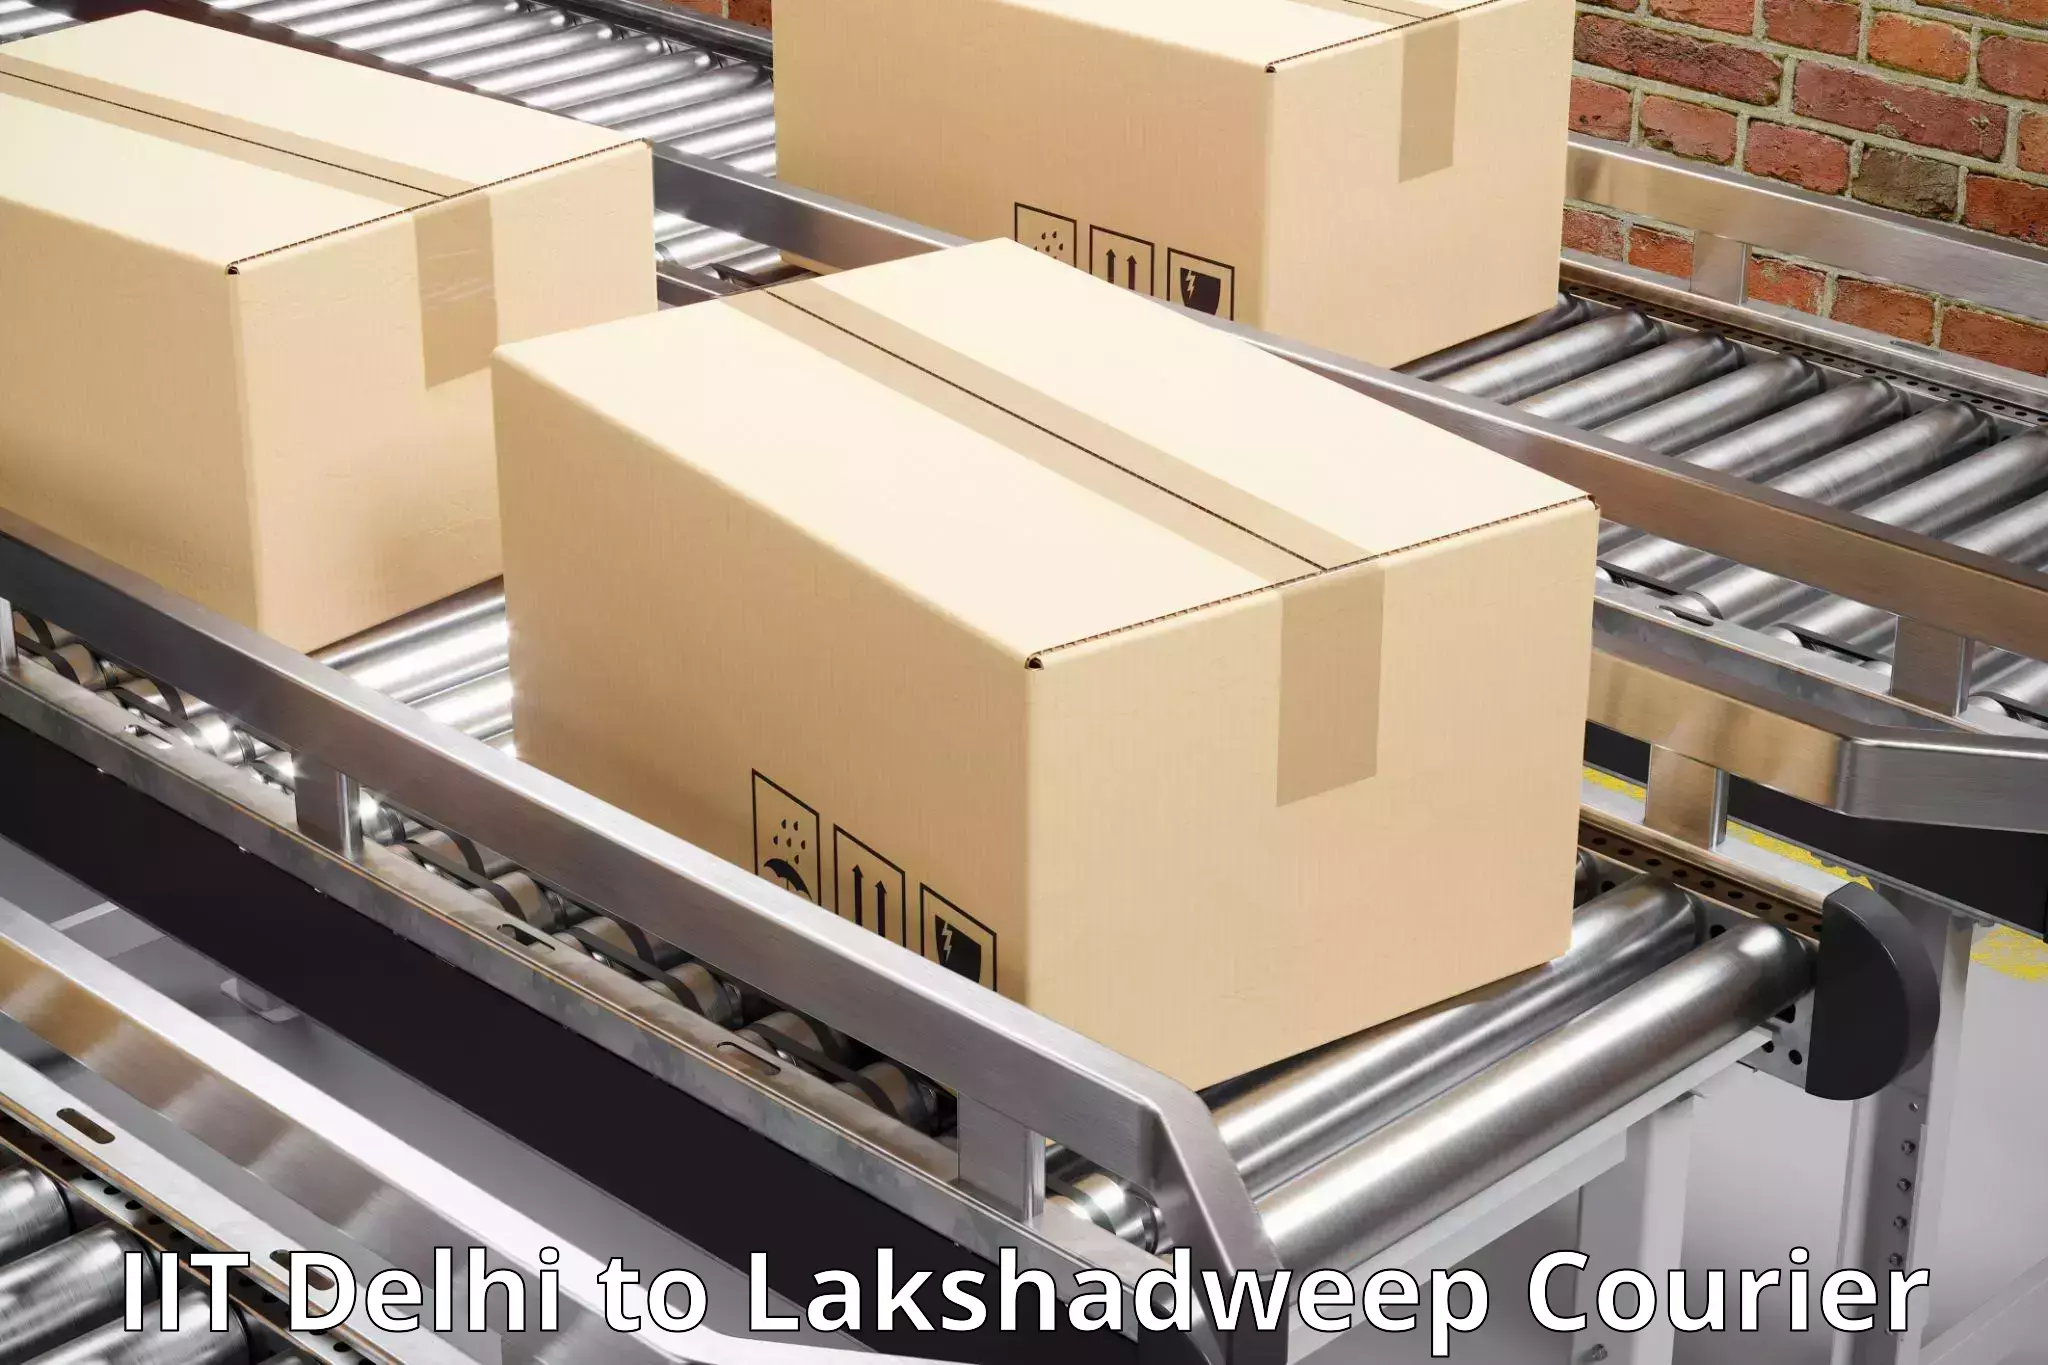 Logistics service provider IIT Delhi to Lakshadweep